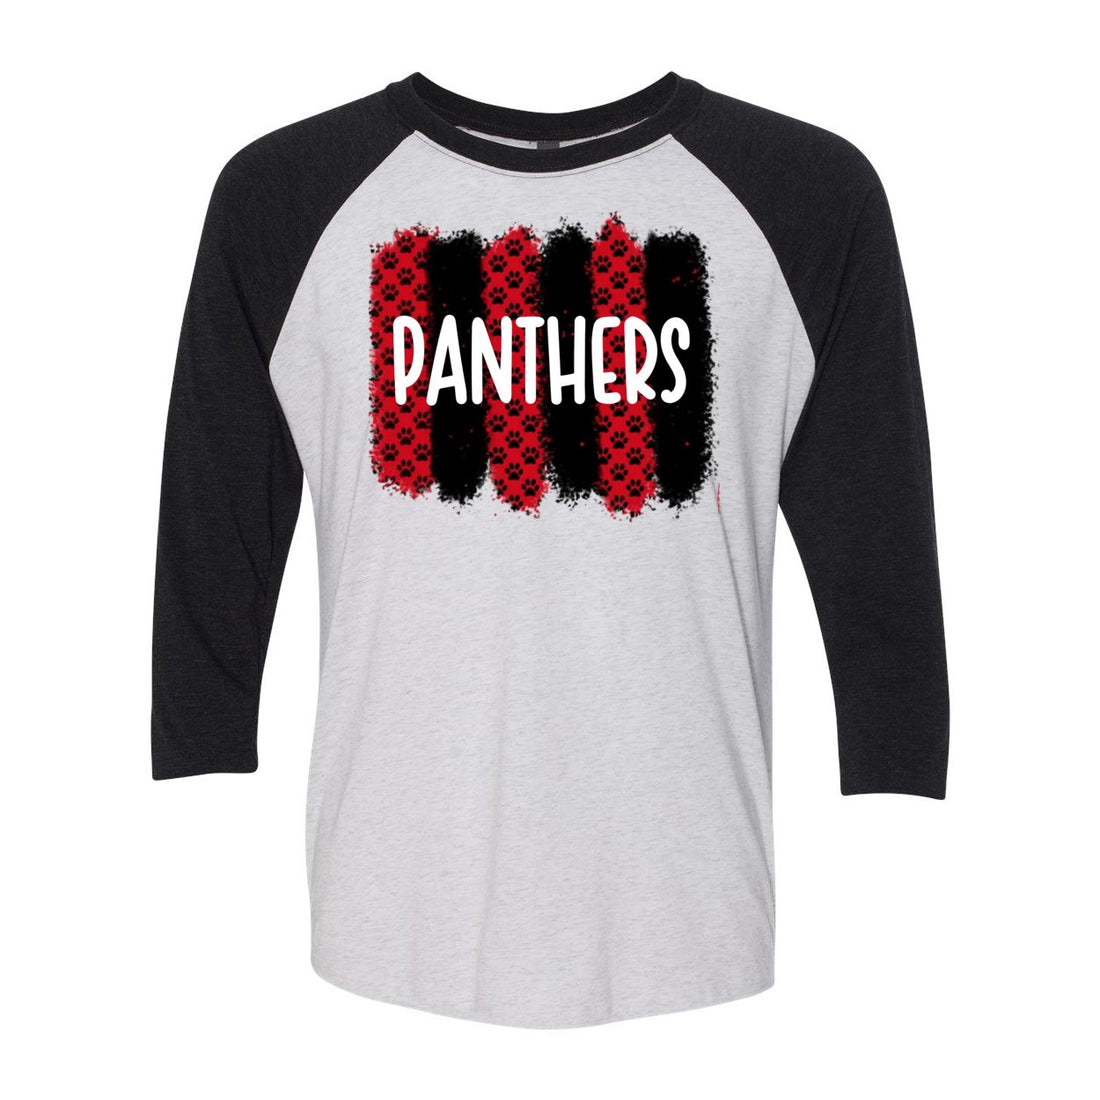 Panthers Paw 3/4 Sleeve Baseball Raglan Tee - T-Shirts - Positively Sassy - Panthers Paw 3/4 Sleeve Baseball Raglan Tee